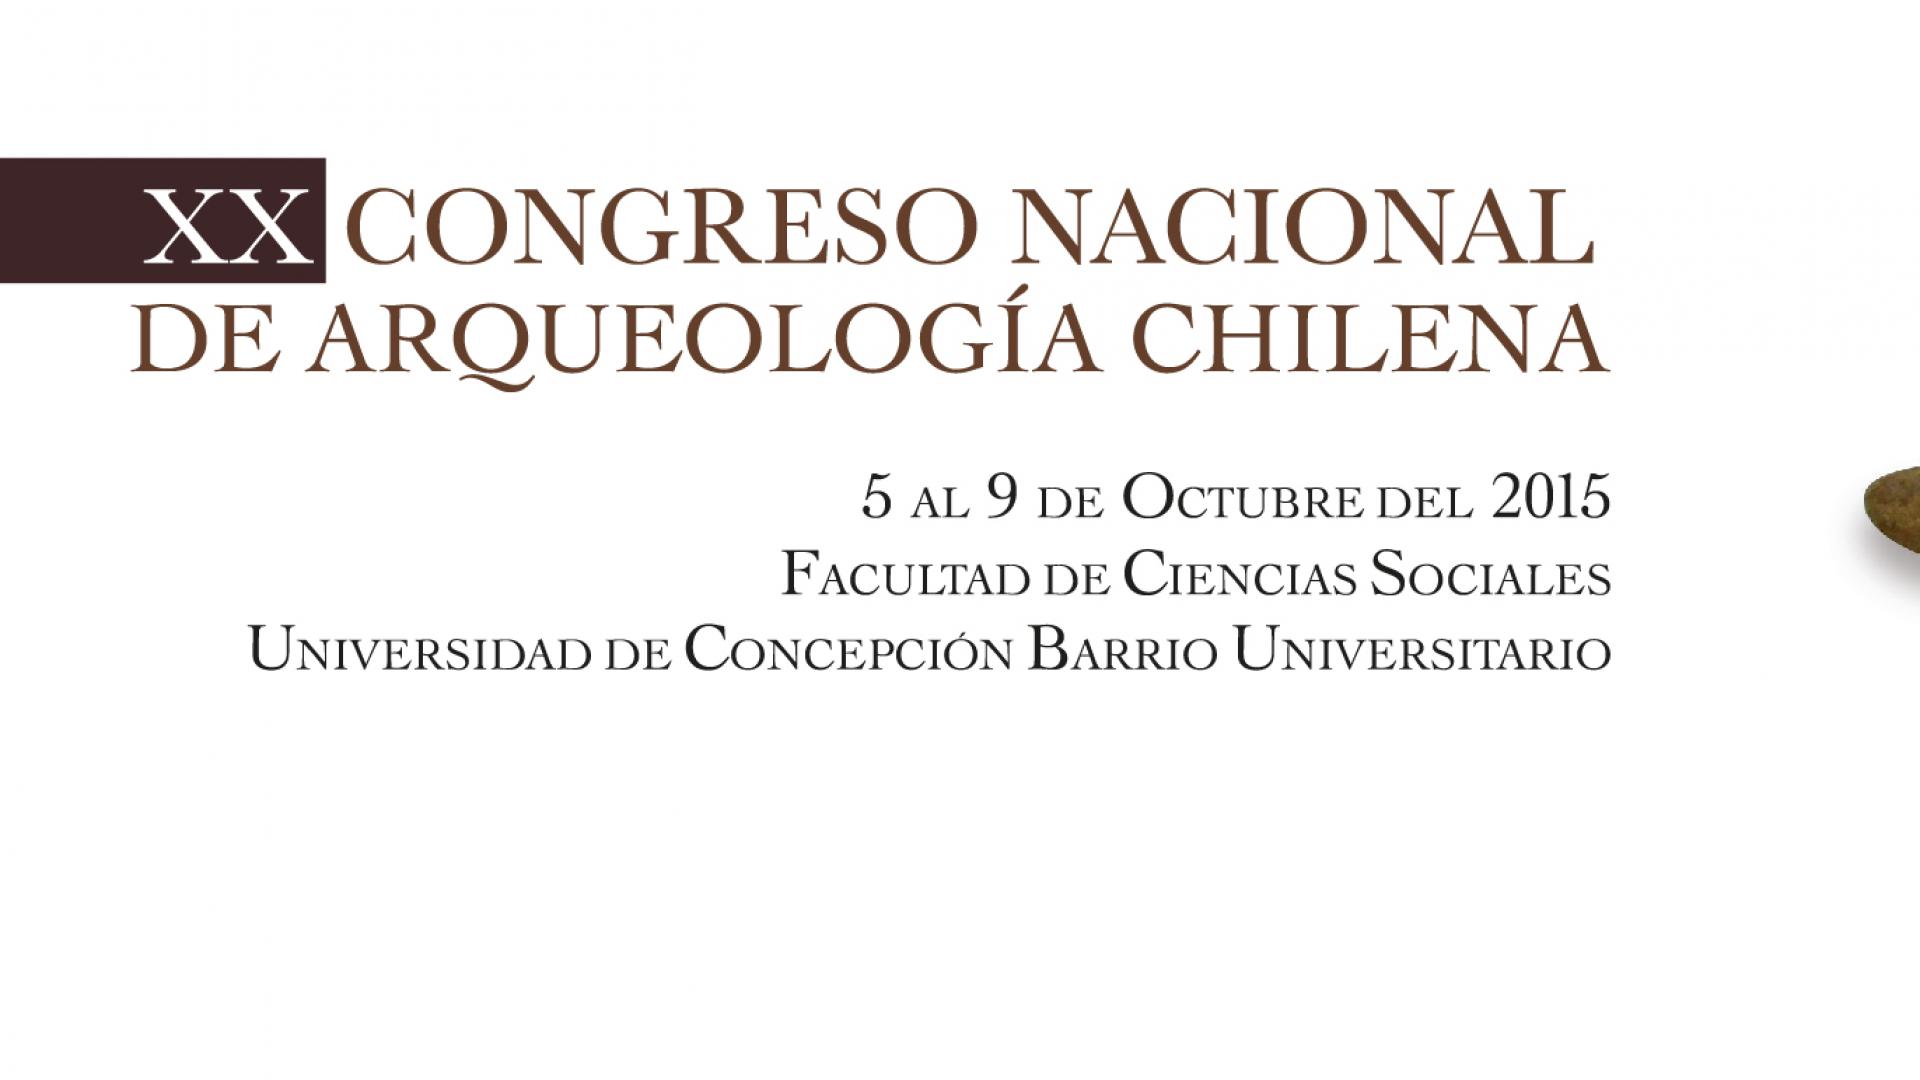 Imagen de XX Congreso Nacional de Arqueología Chilena